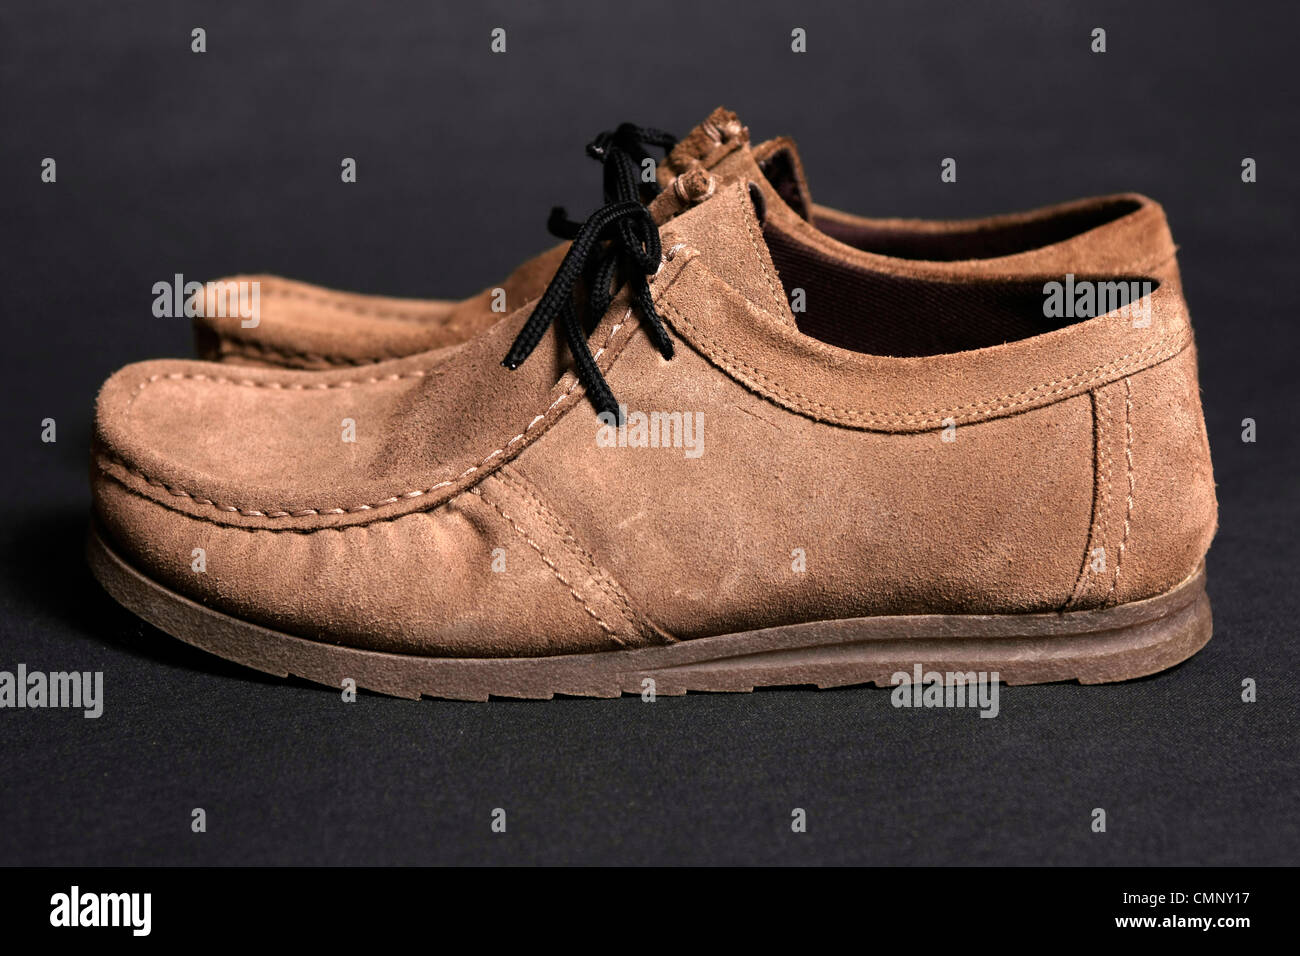 Hombre zapatos de gamuza marrón sobre un fondo negro Foto de stock